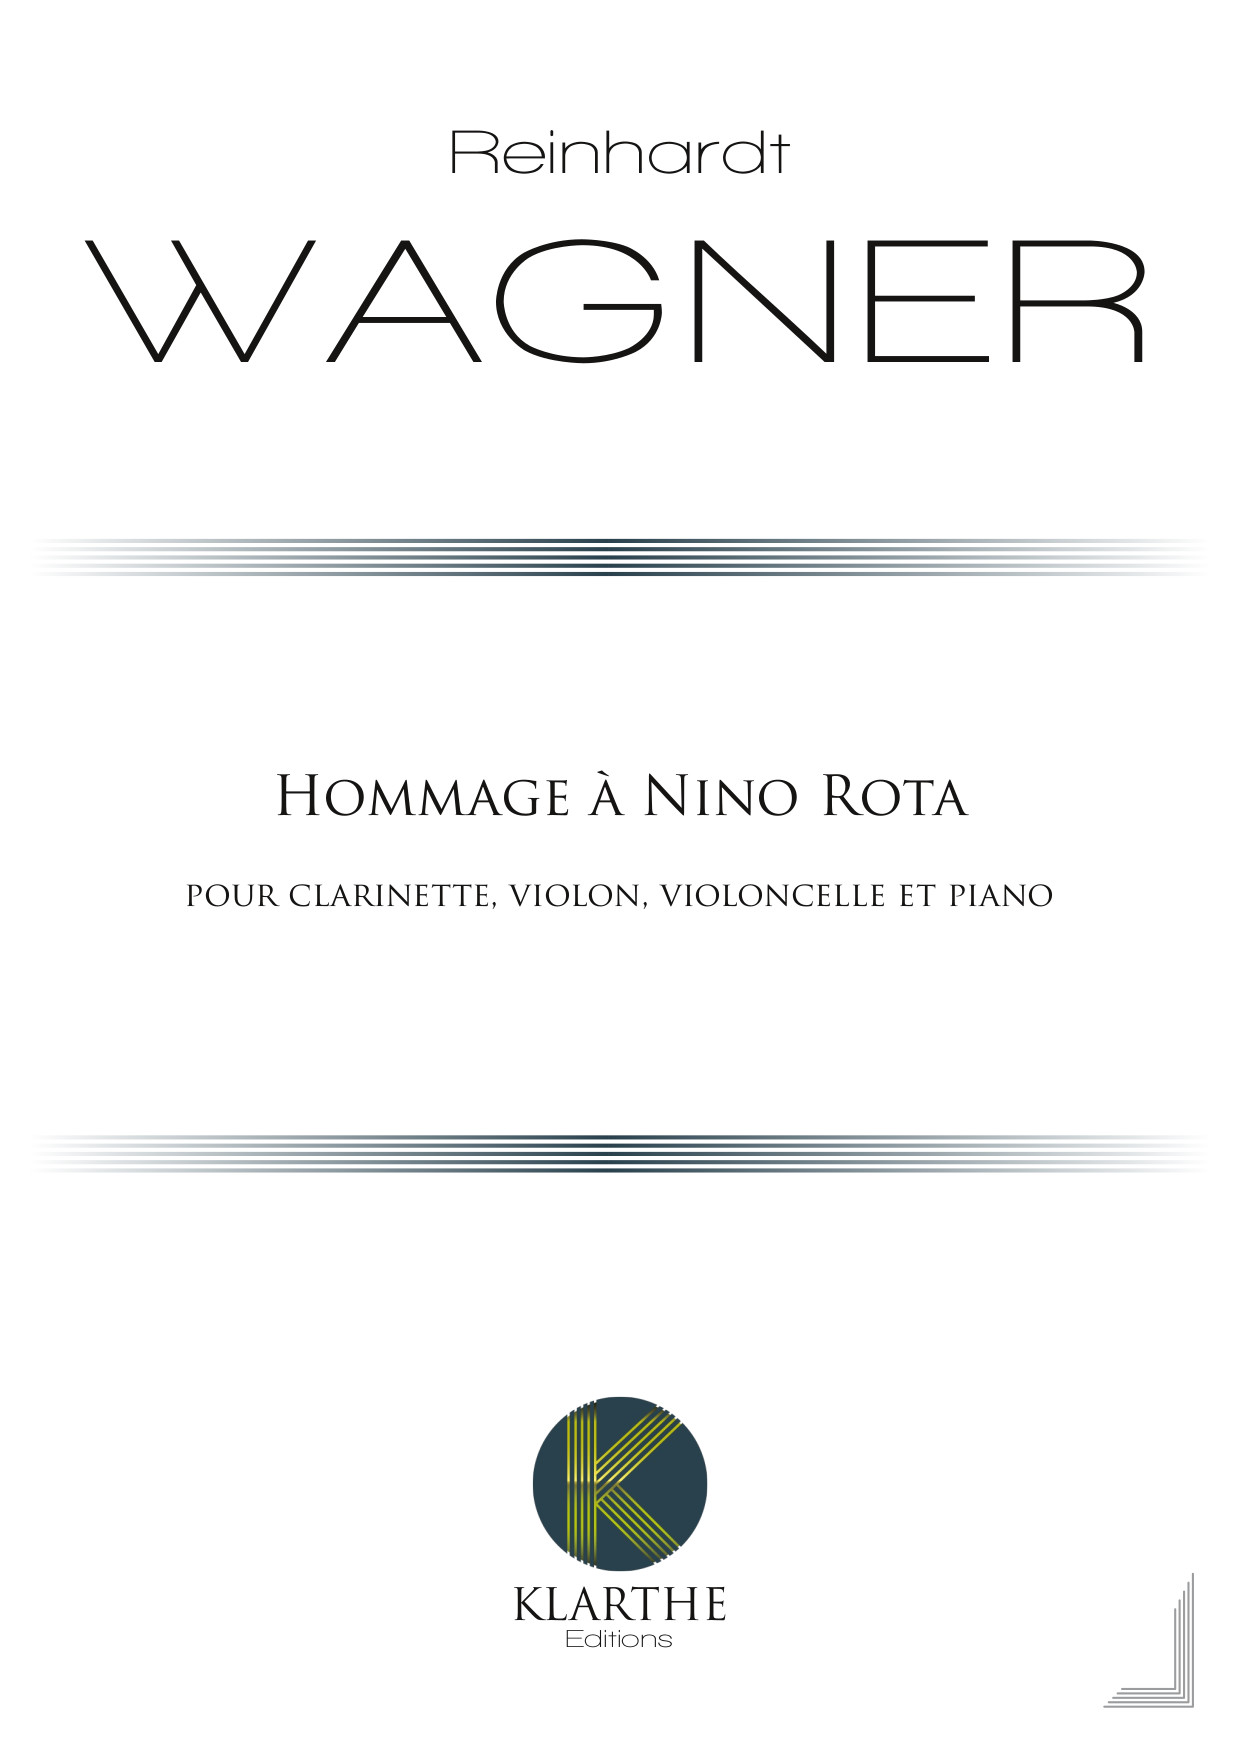 Hommage à Nino Rota (WAGNER REINHARDT)